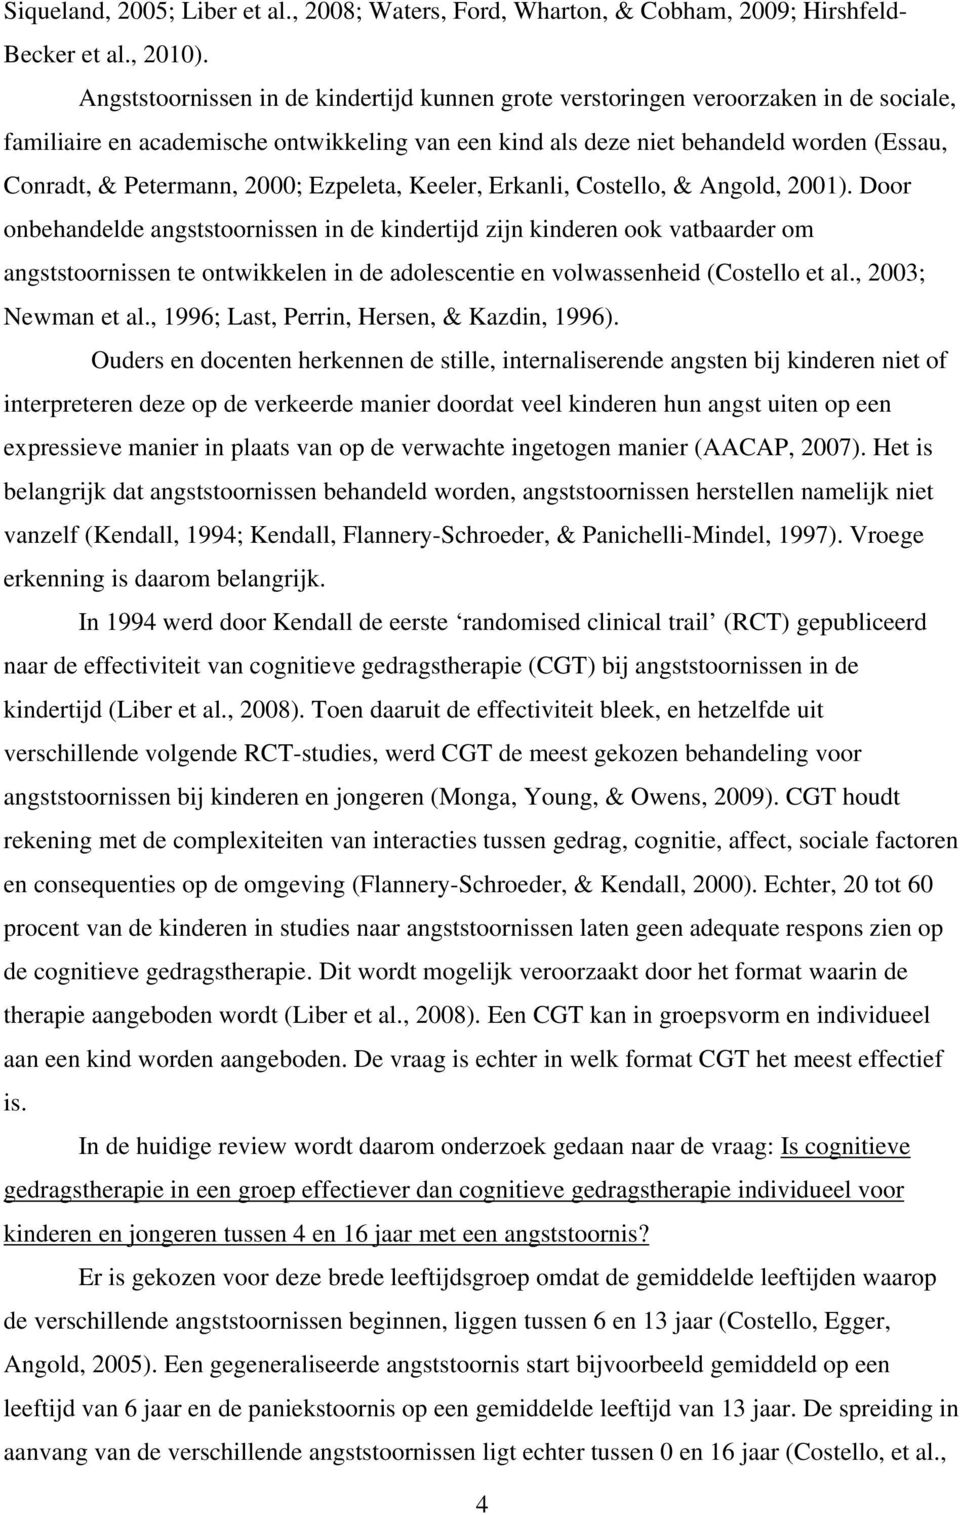 2000; Ezpeleta, Keeler, Erkanli, Costello, & Angold, 2001).